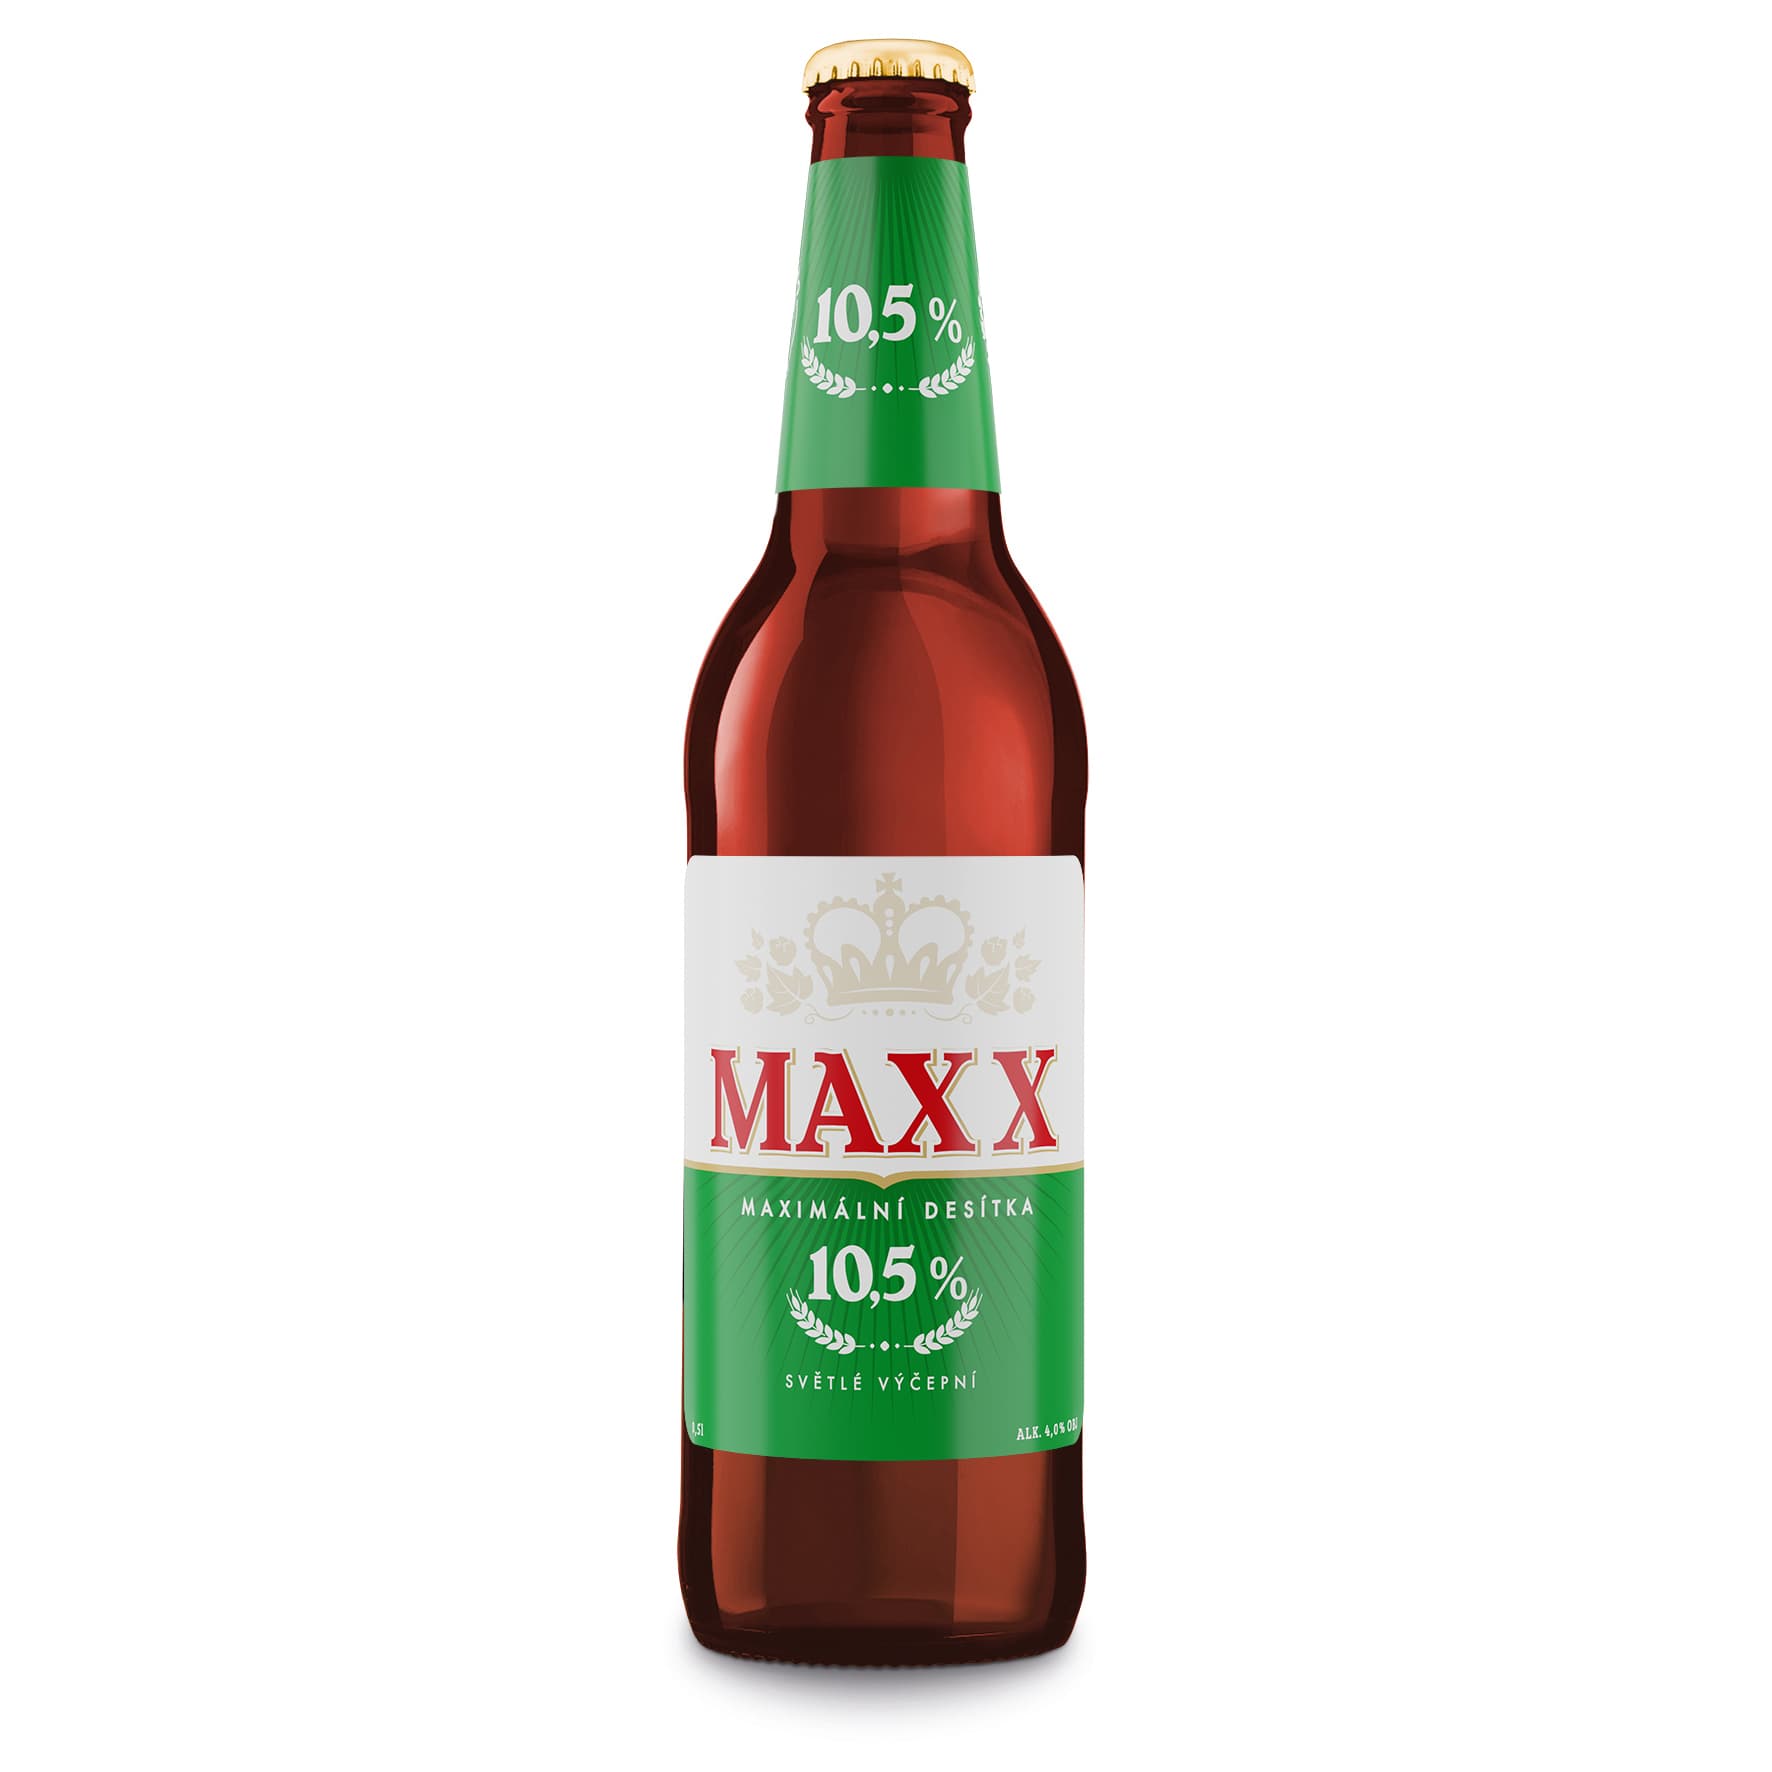 Max X 20 ks / 0,5 l